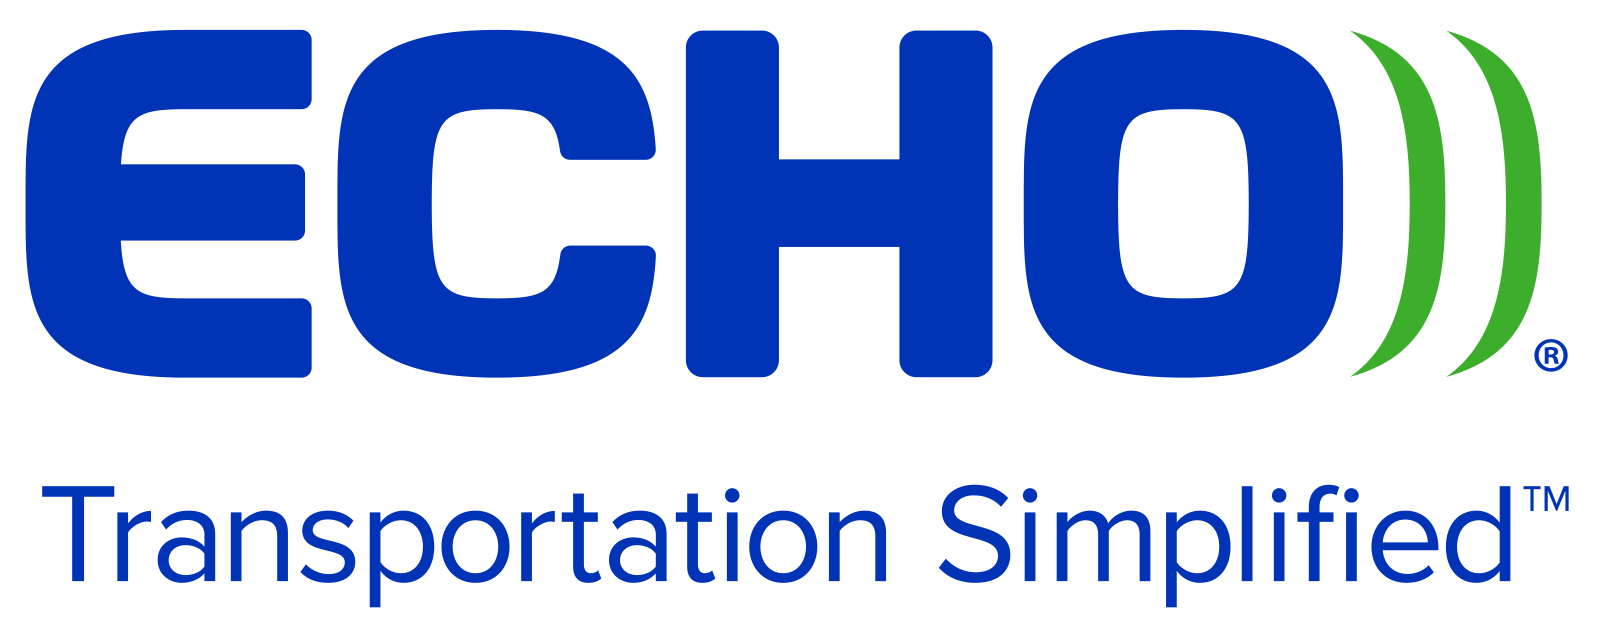 Echo Company Logo